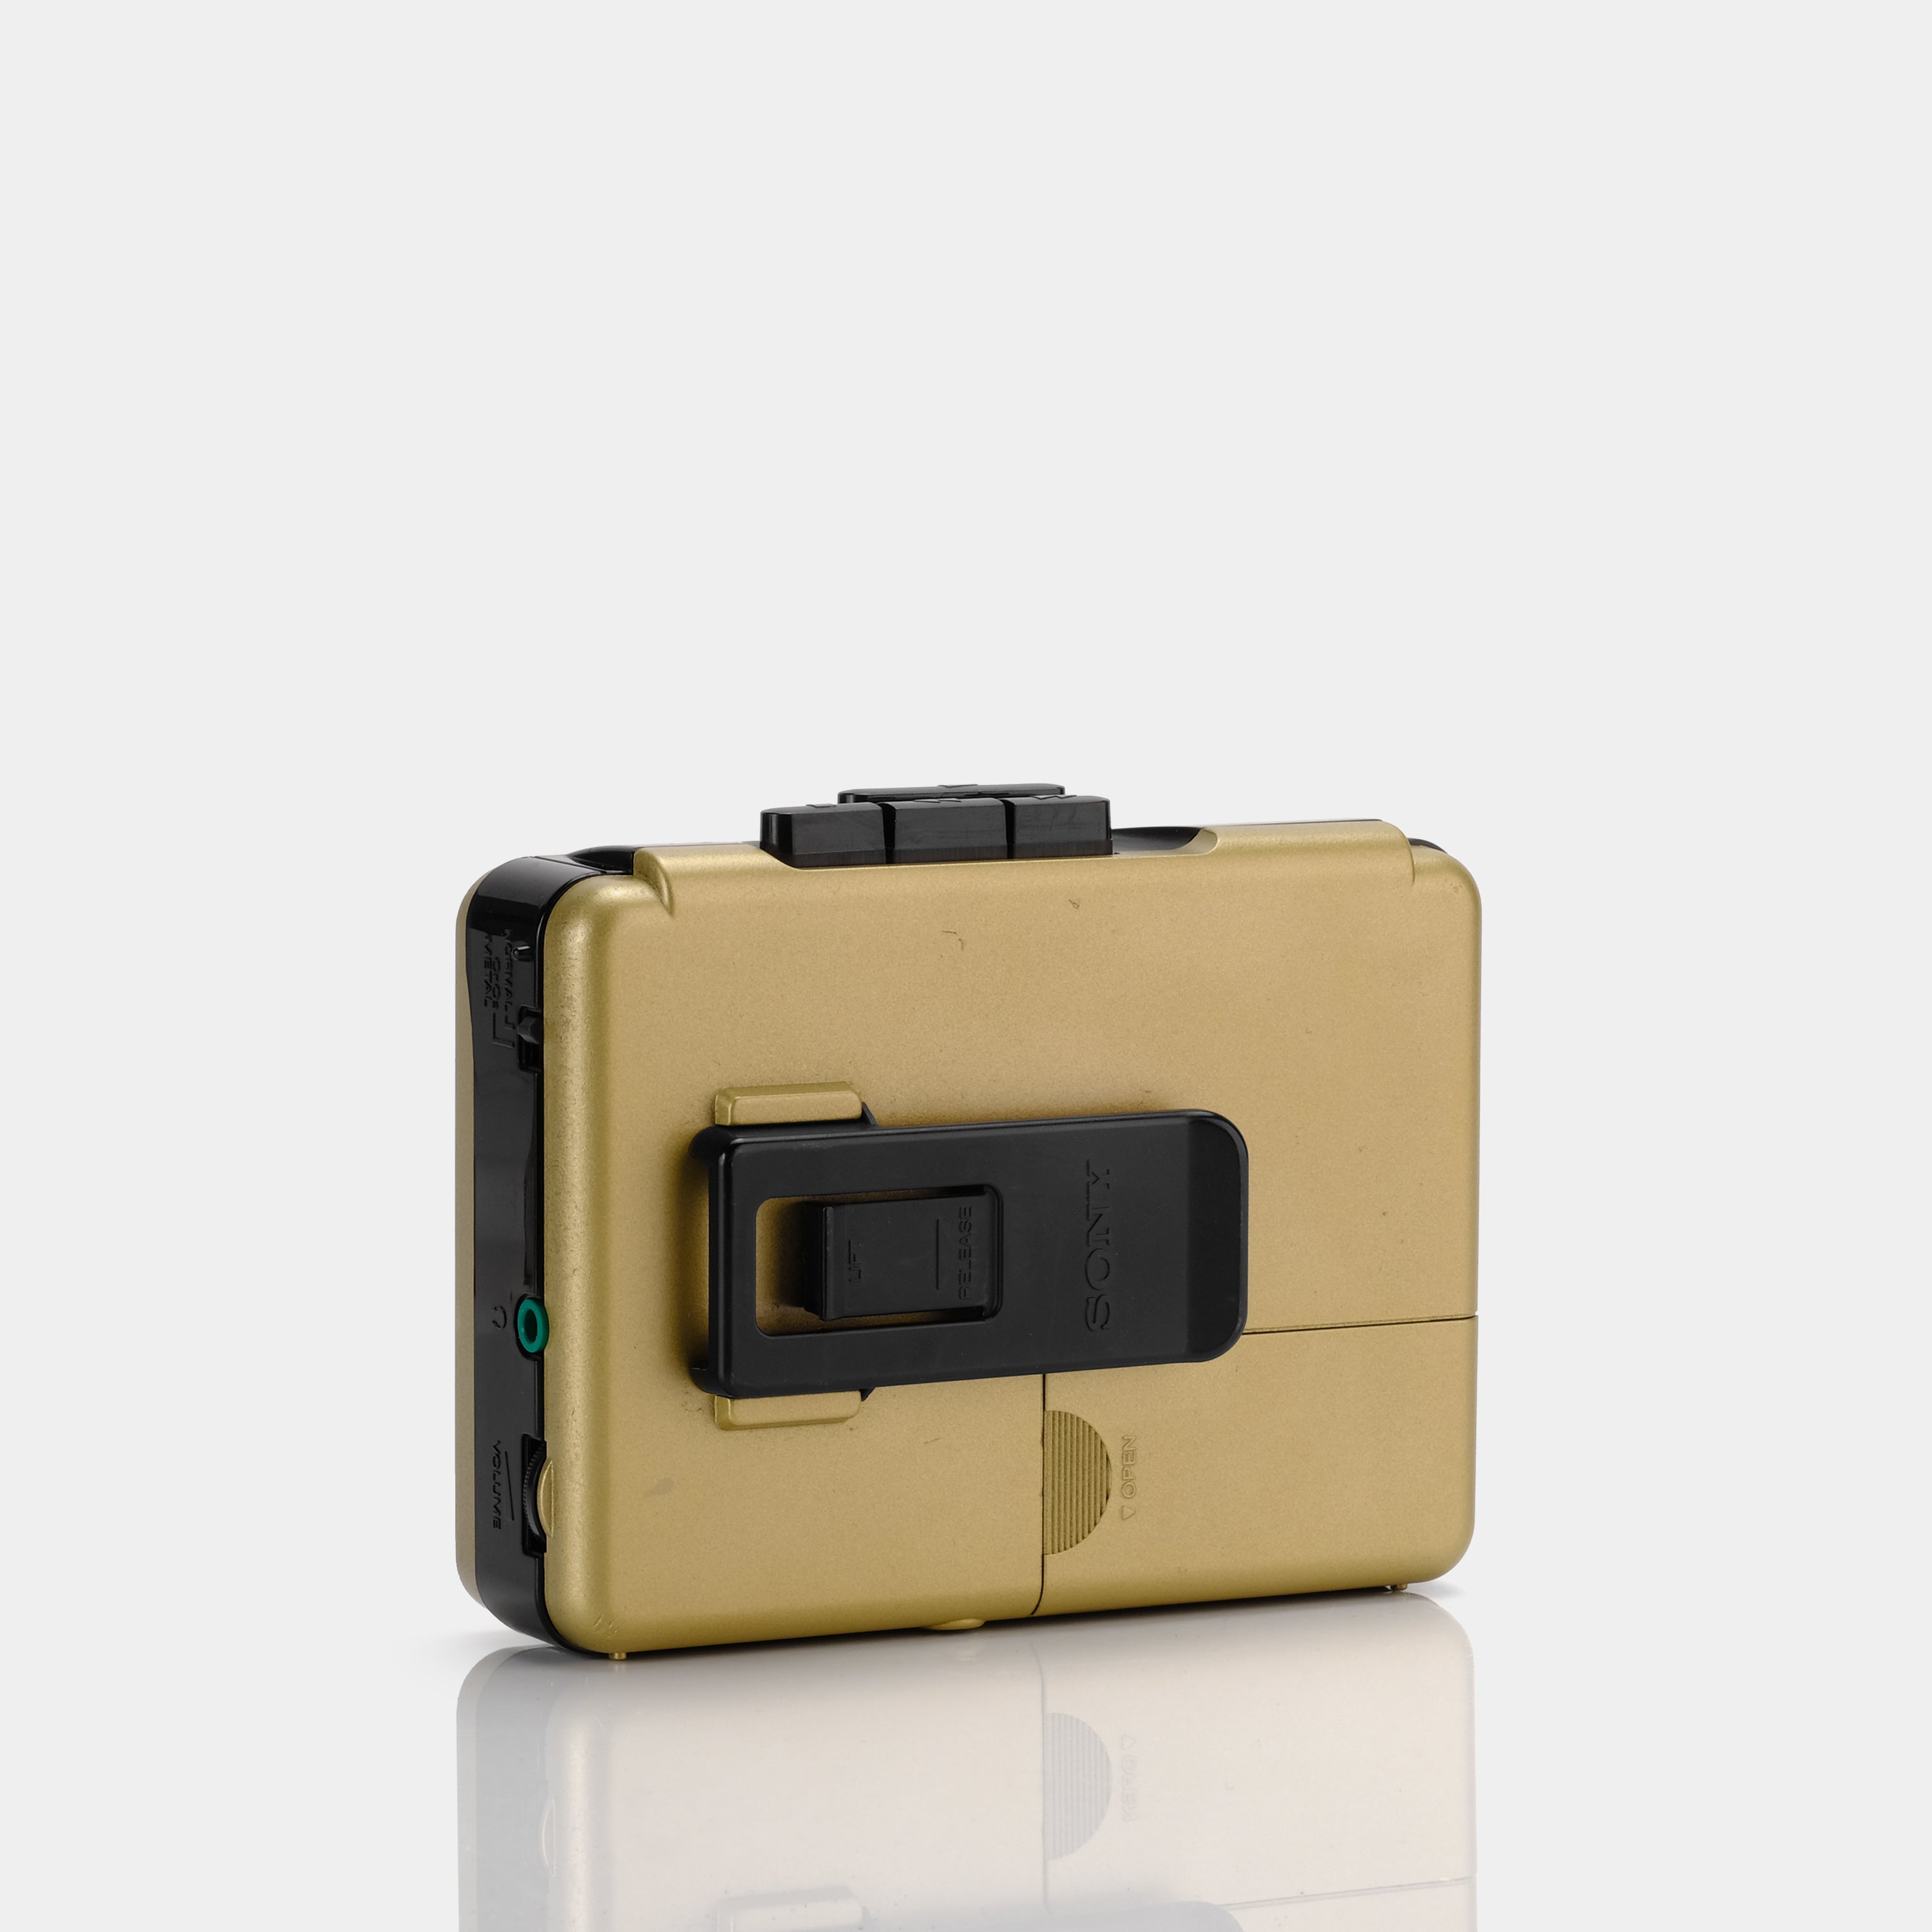 Sony Walkman WM-A12 Gold Portable Cassette Player